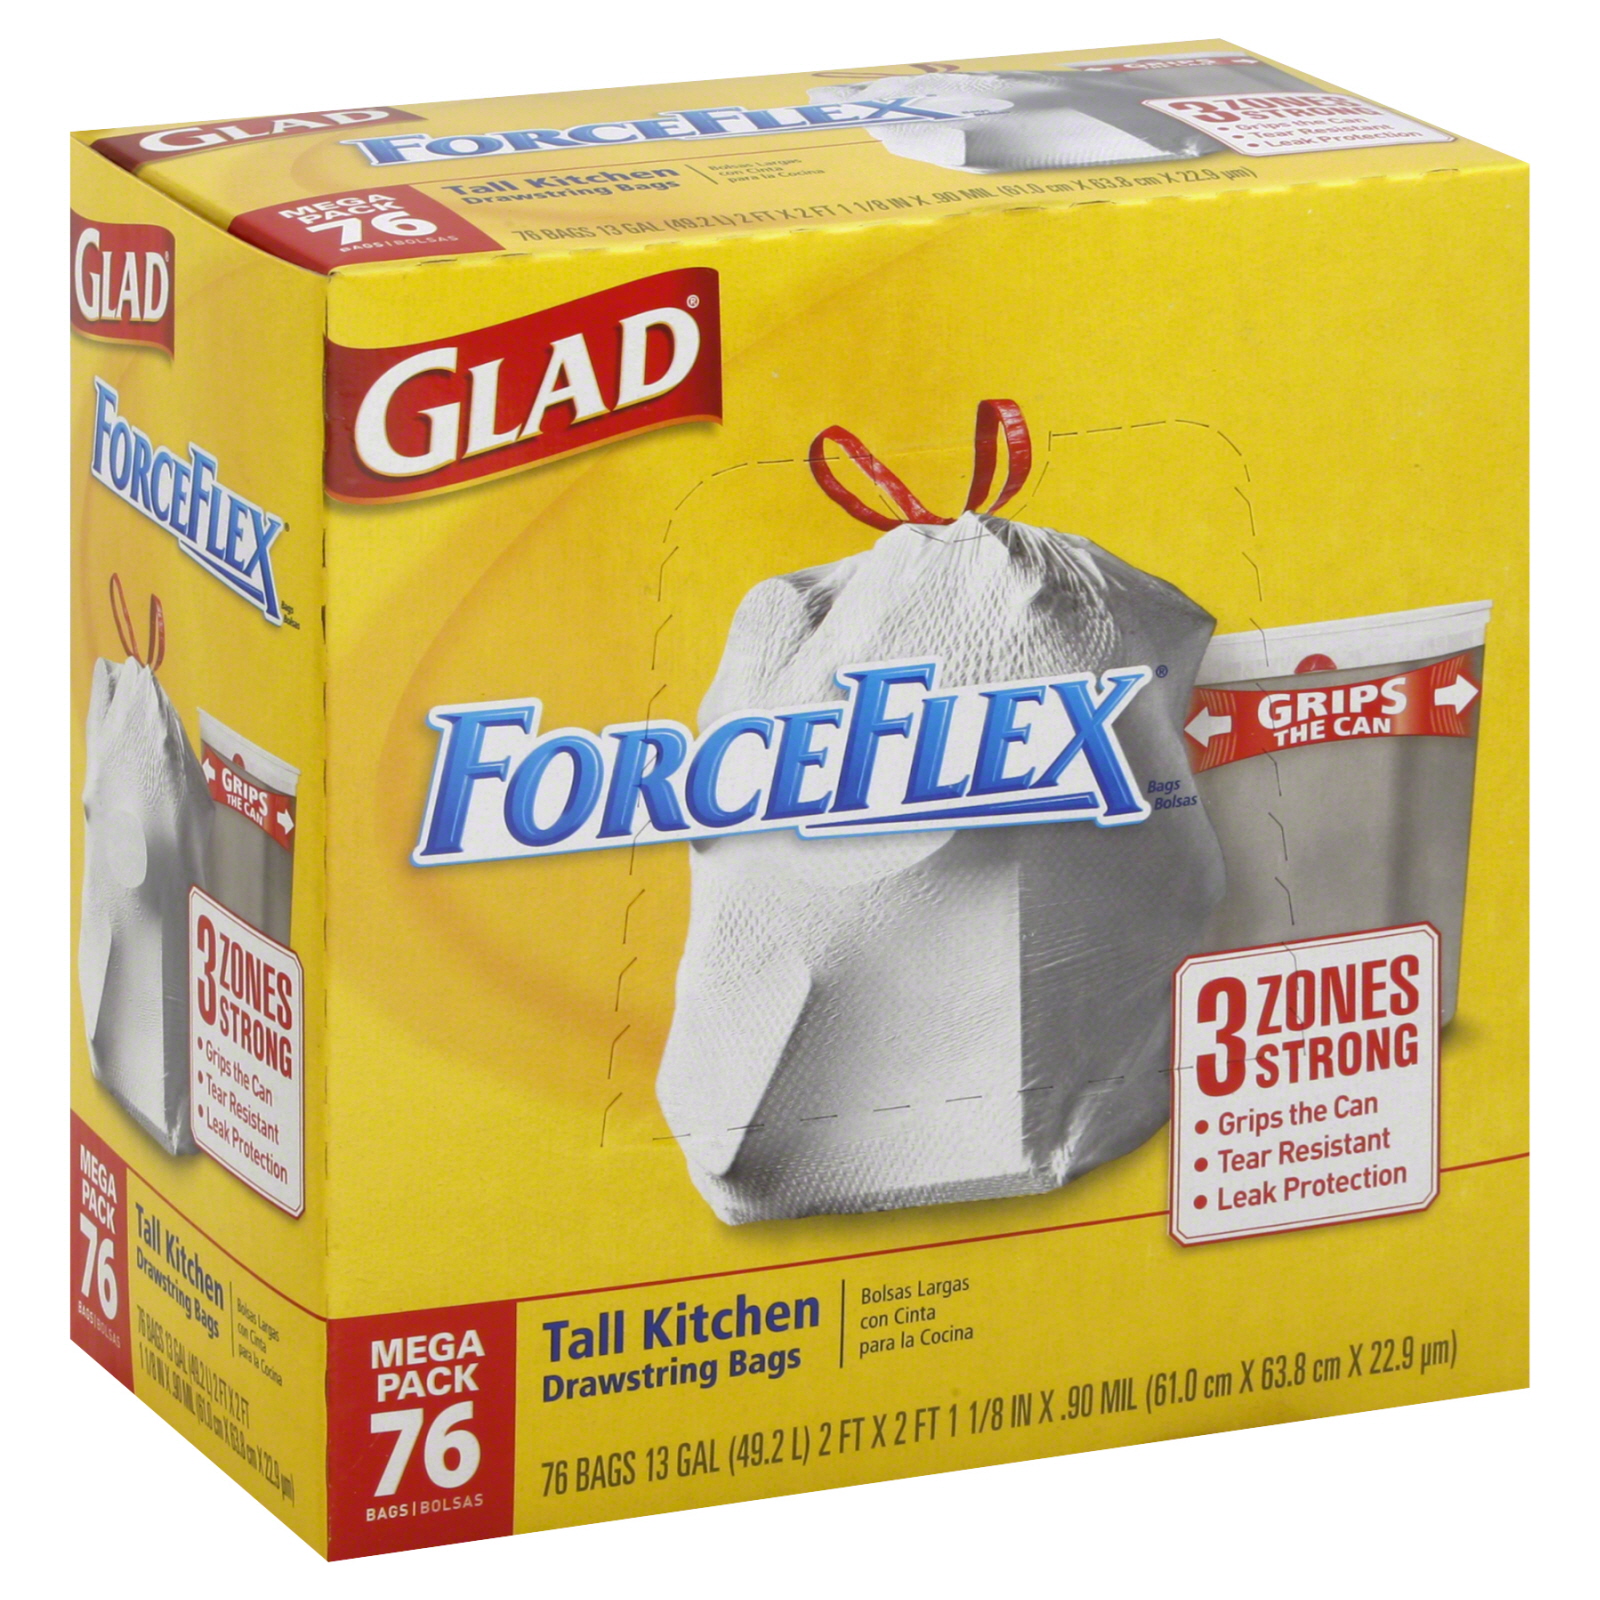 Glad ForceFlex Tall Kitchen Drawstring Trash Bags - 100 count